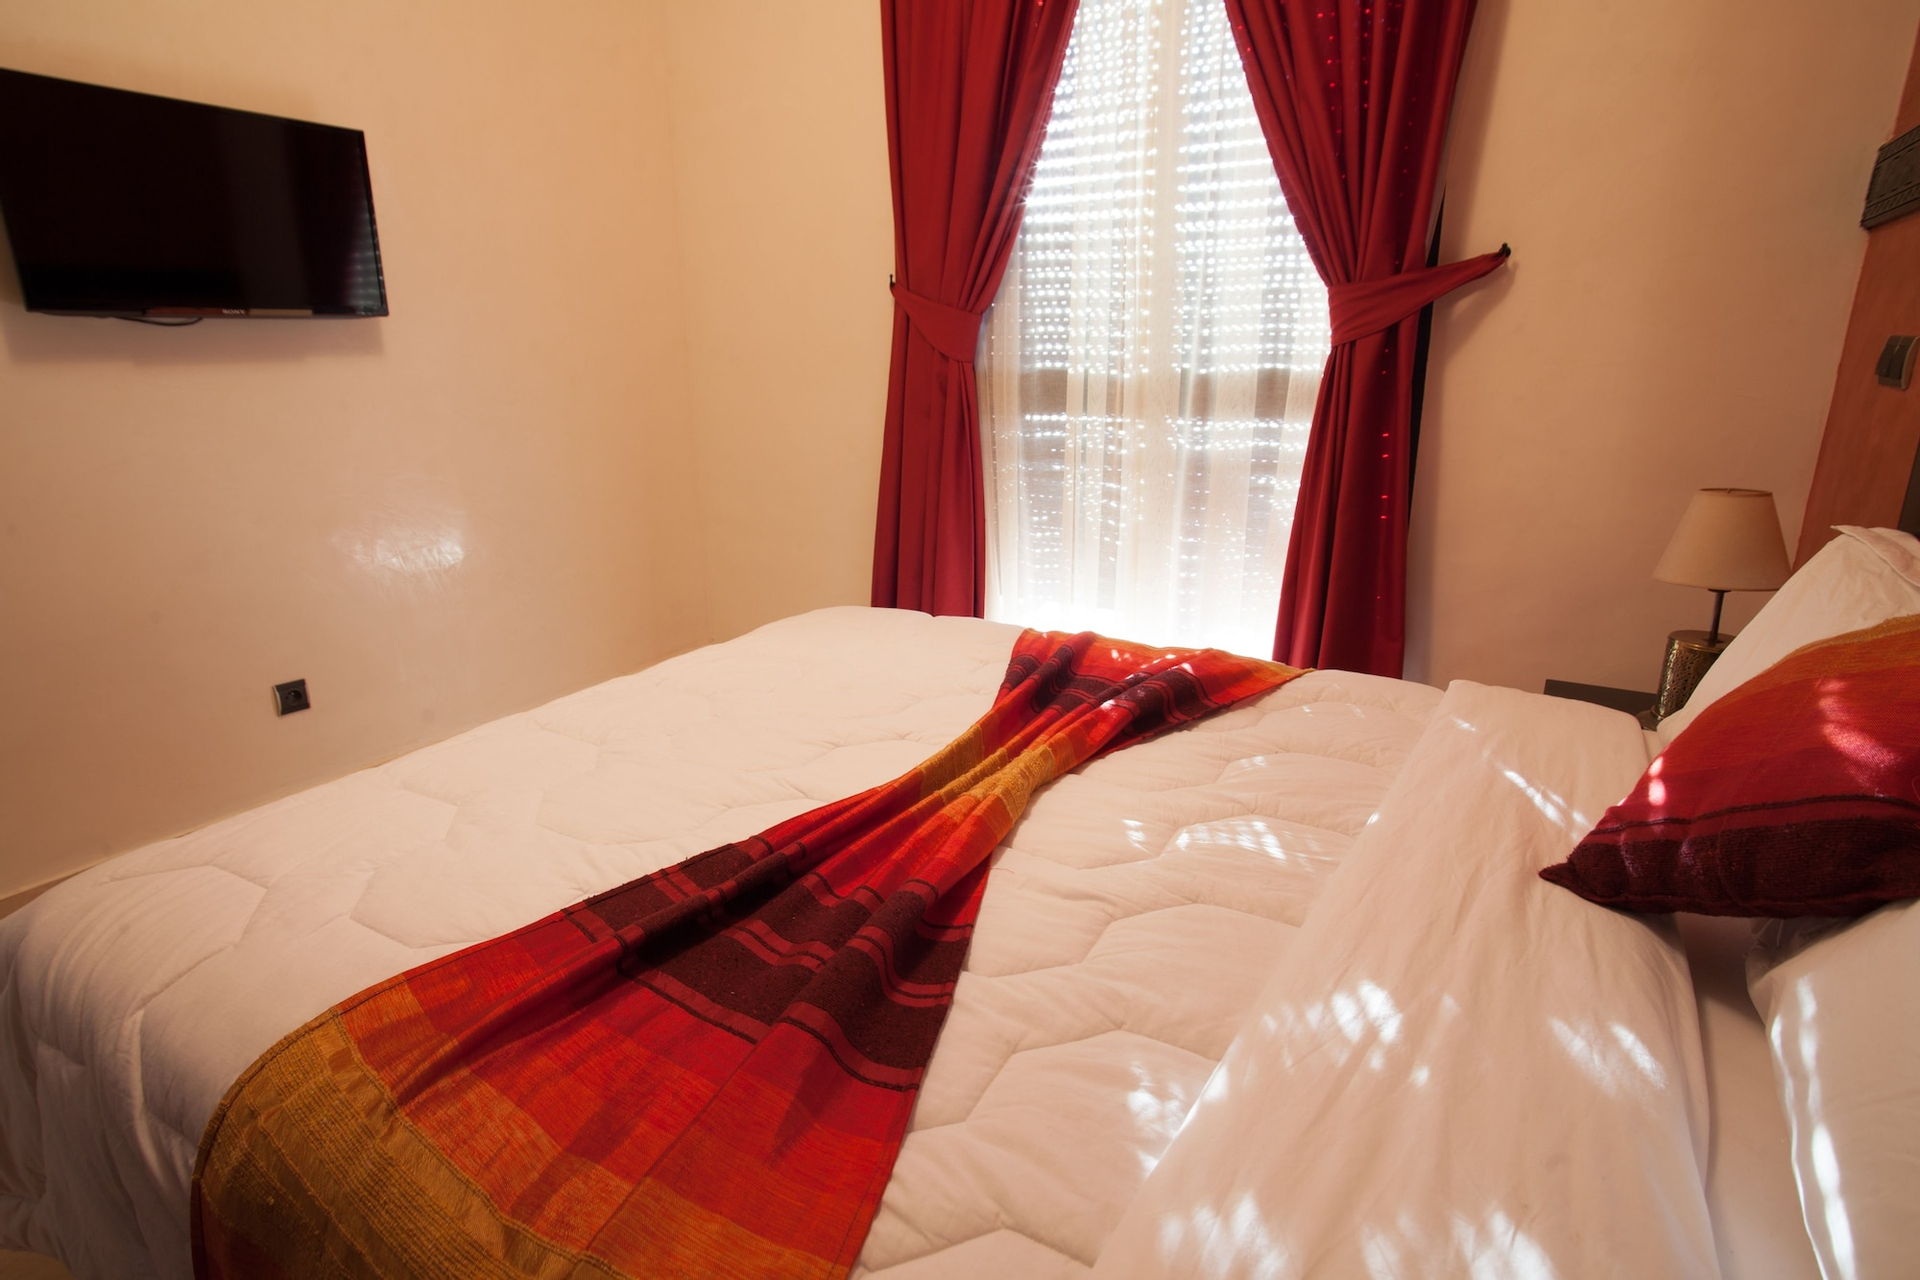 Room 4, Apartments Premium Village, Marrakech